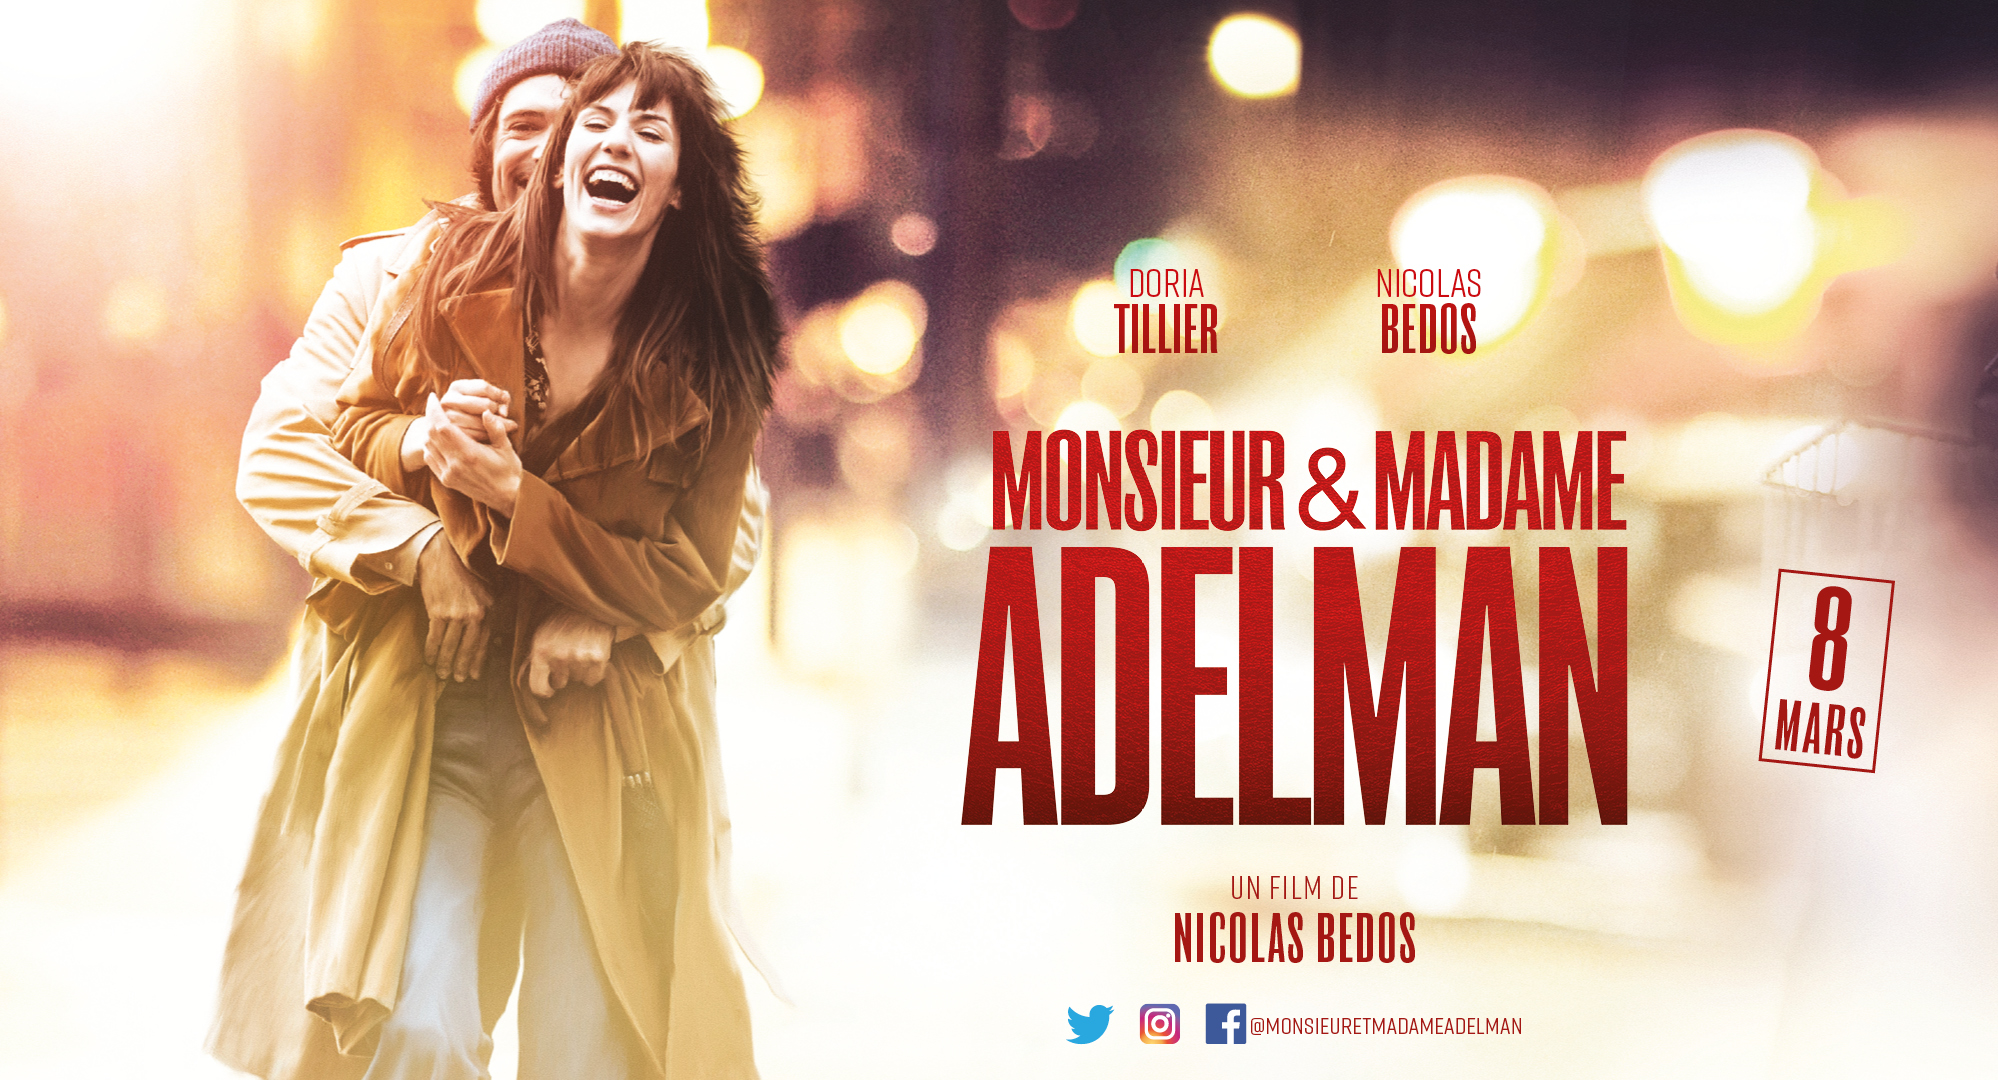 monsieur & madame adelman - Monsieur & Madame Adelman : inspiré et inspirant ADELMAN CartonAttente 01